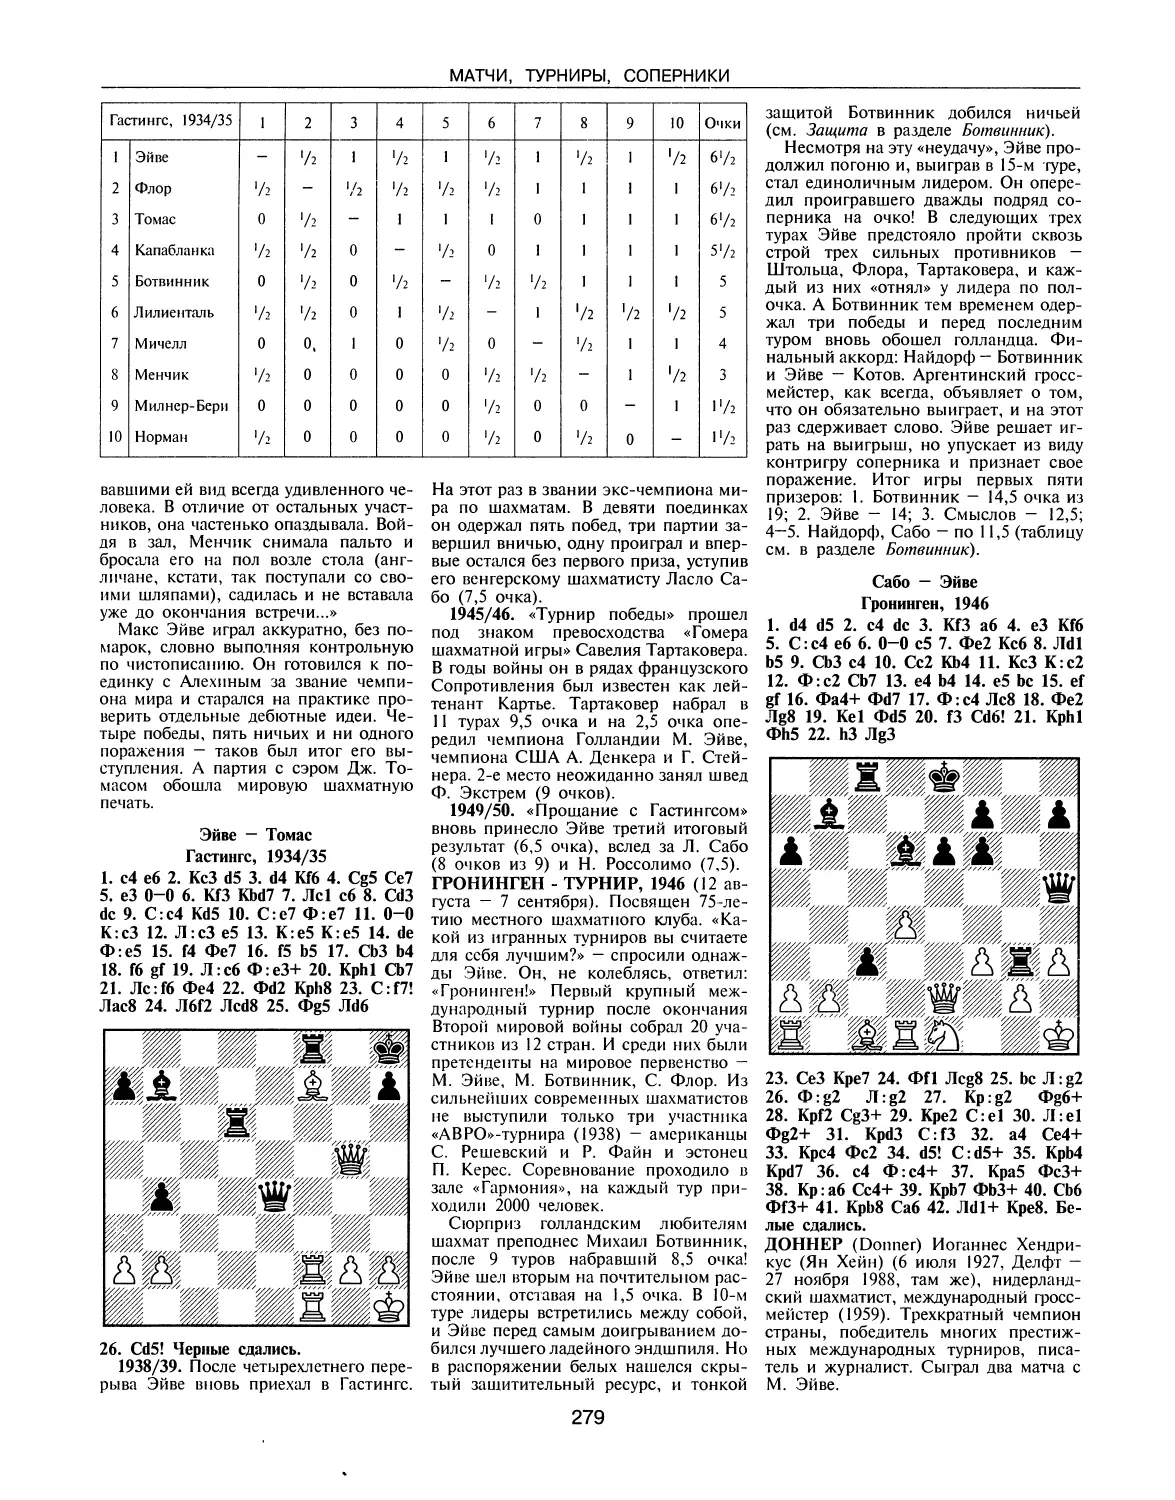 Гронинген-турнир, 1946
Доннер И.